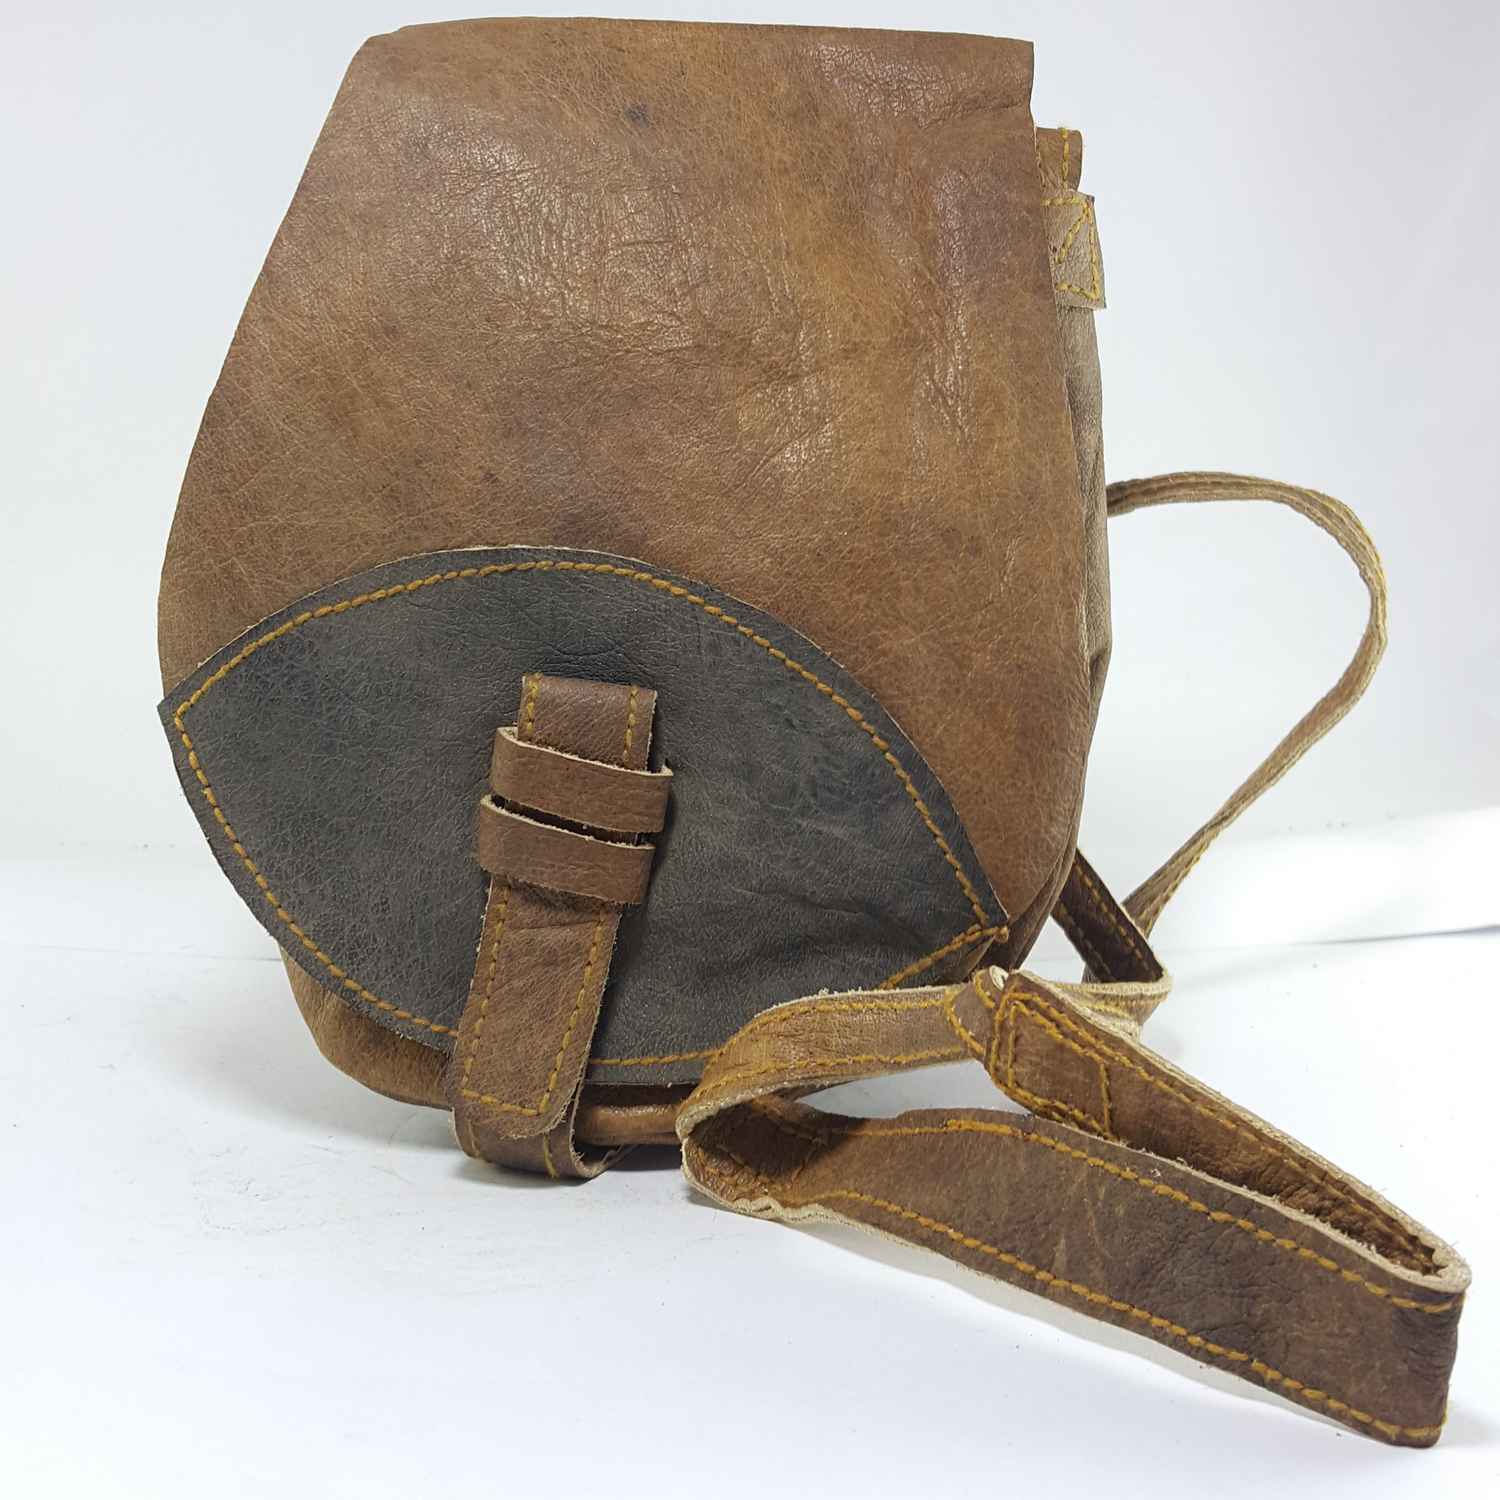 Pure Leather Handmade Shoulder Bag all Hand Stitched, 1 Pocket, leather Strip Lock